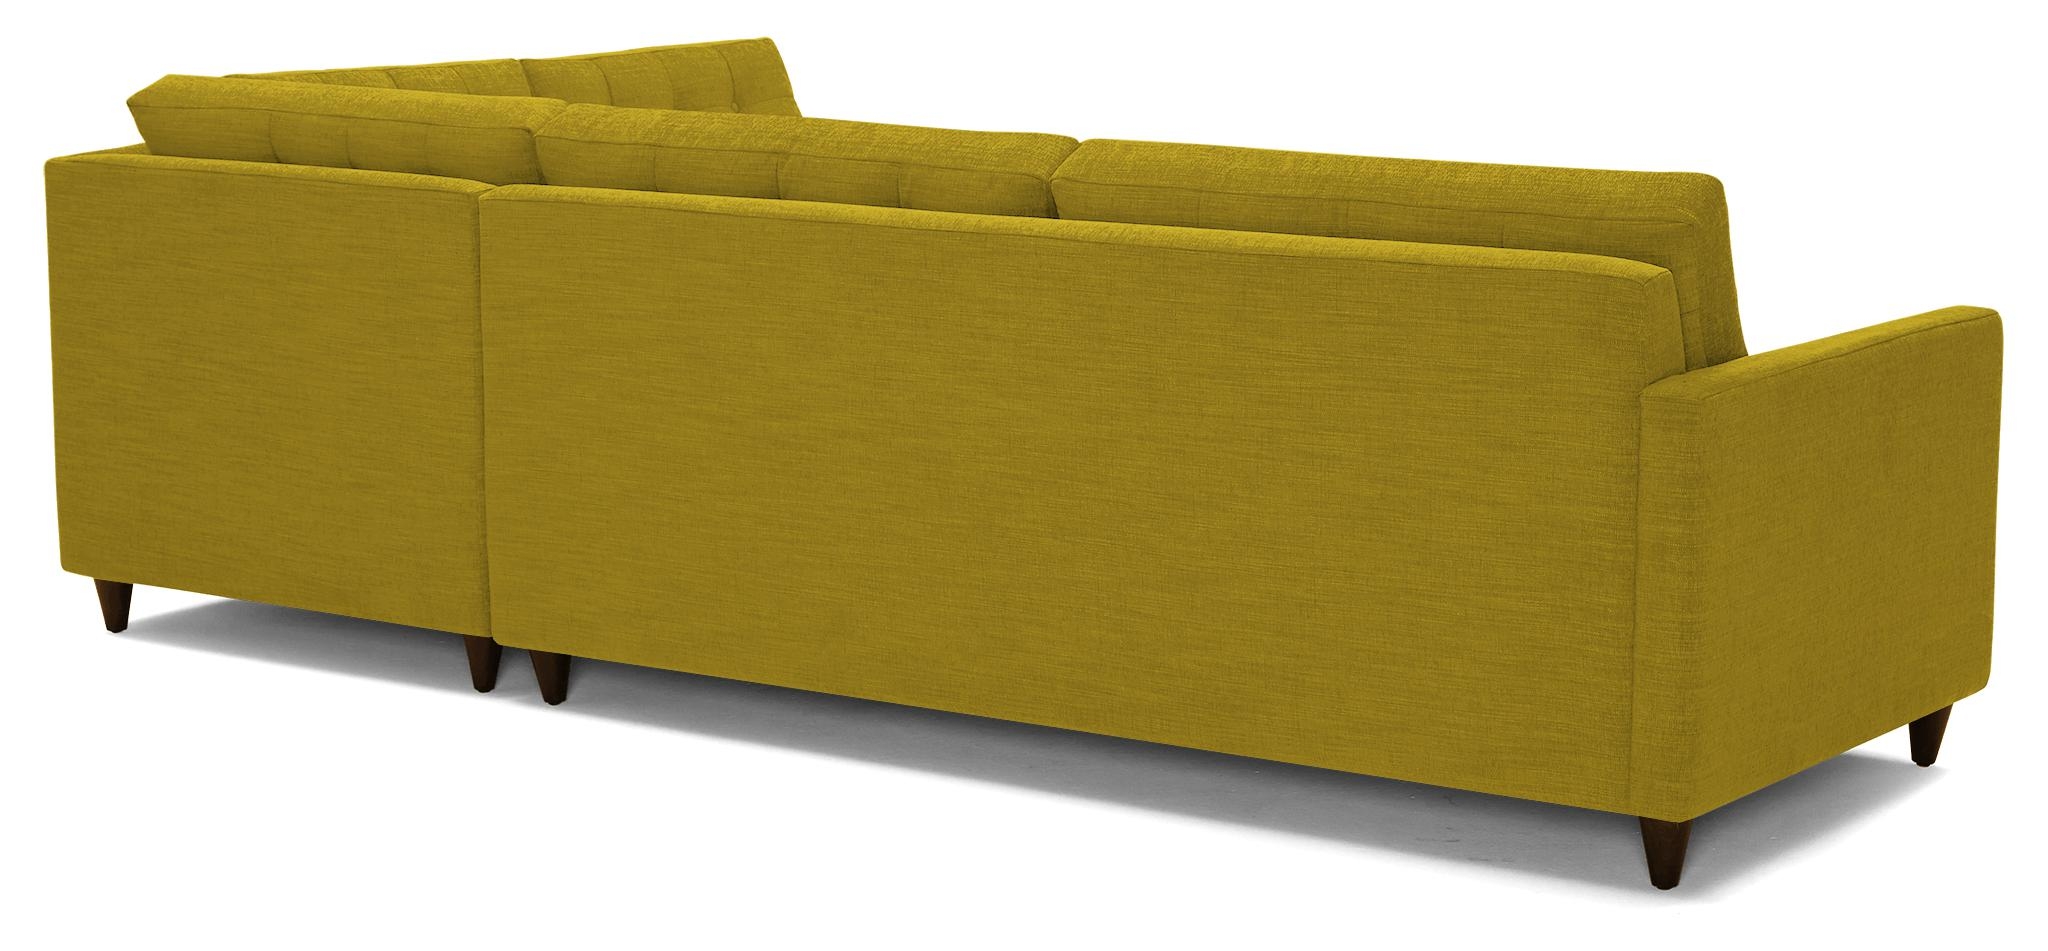 Yellow Eliot Mid Century Modern Bumper Sleeper Sectional - Bloke Goldenrod - Mocha - Left - Image 3